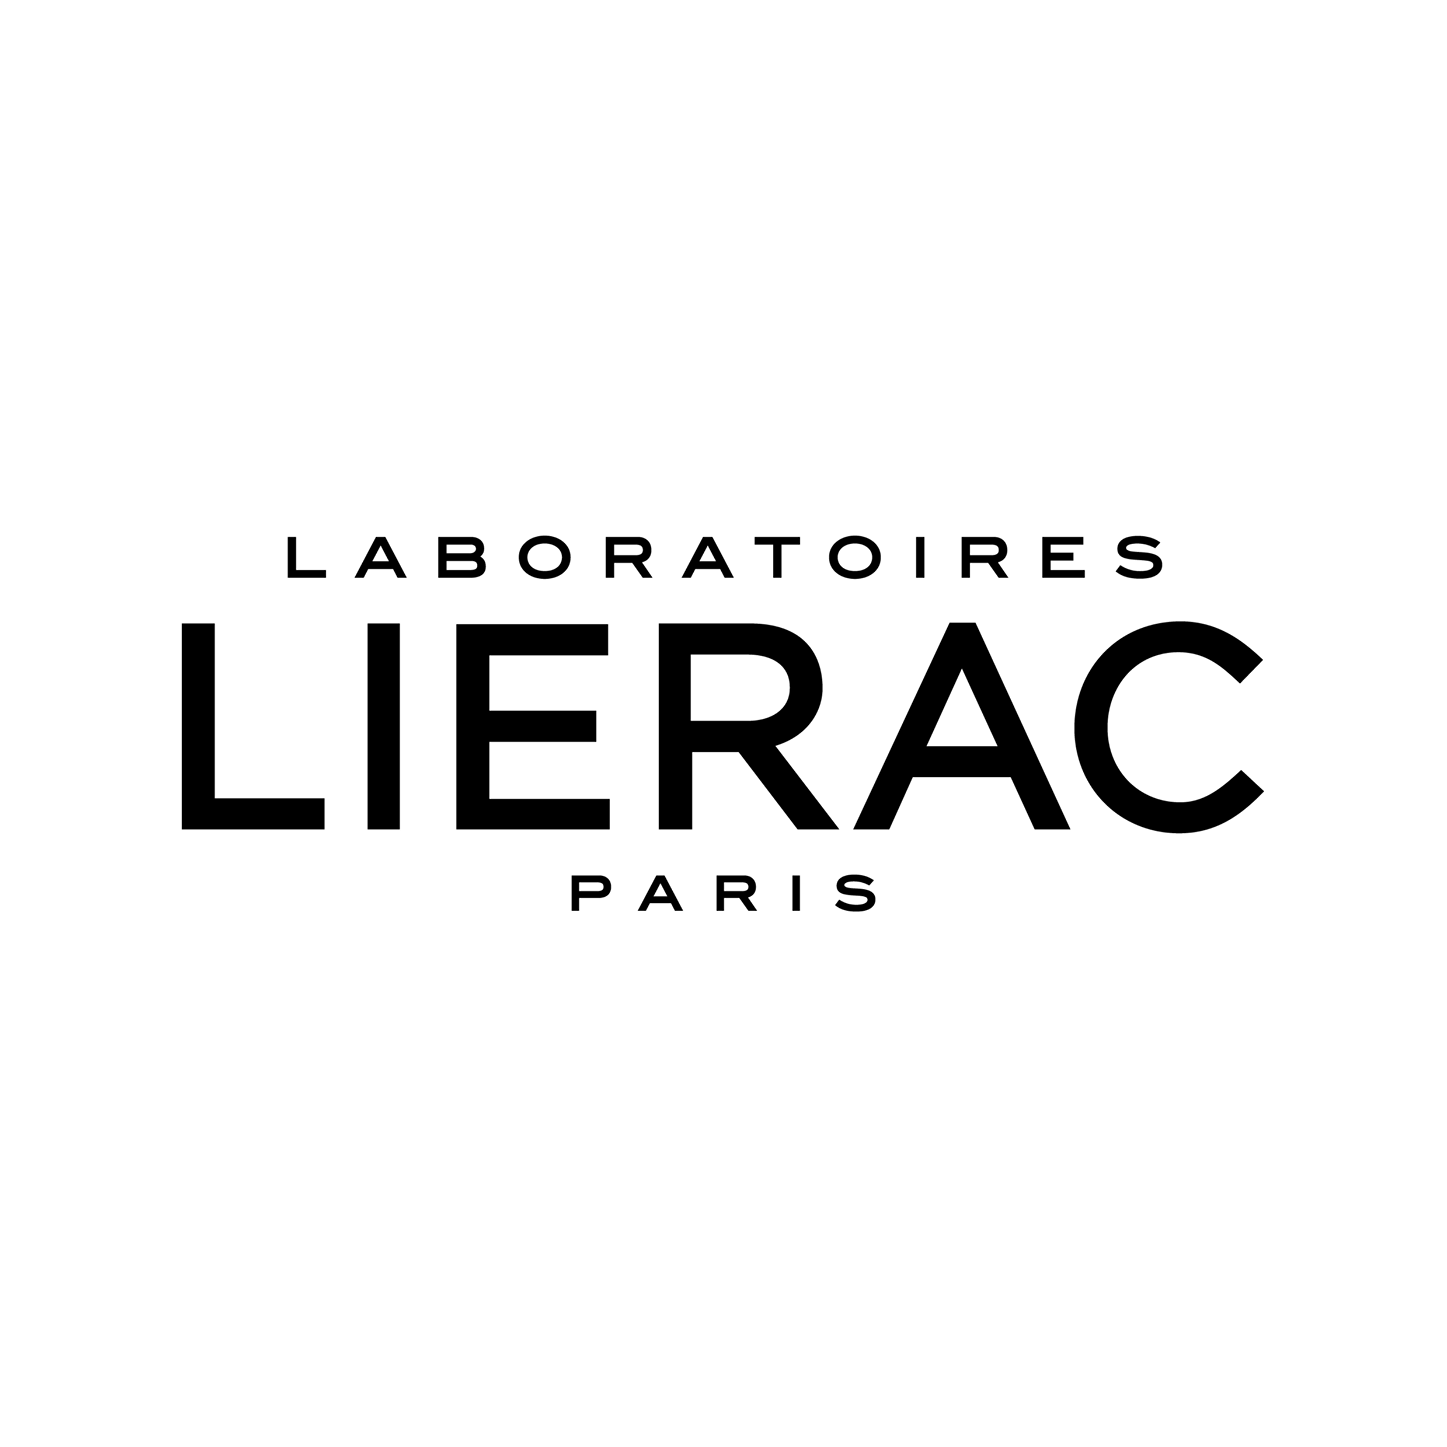 Lierac Premium La Creme Soyeuse Κρέμα Αντιγήρανσης με Υαλουρονικό Οξύ & Νιασιναμίδη 50ml